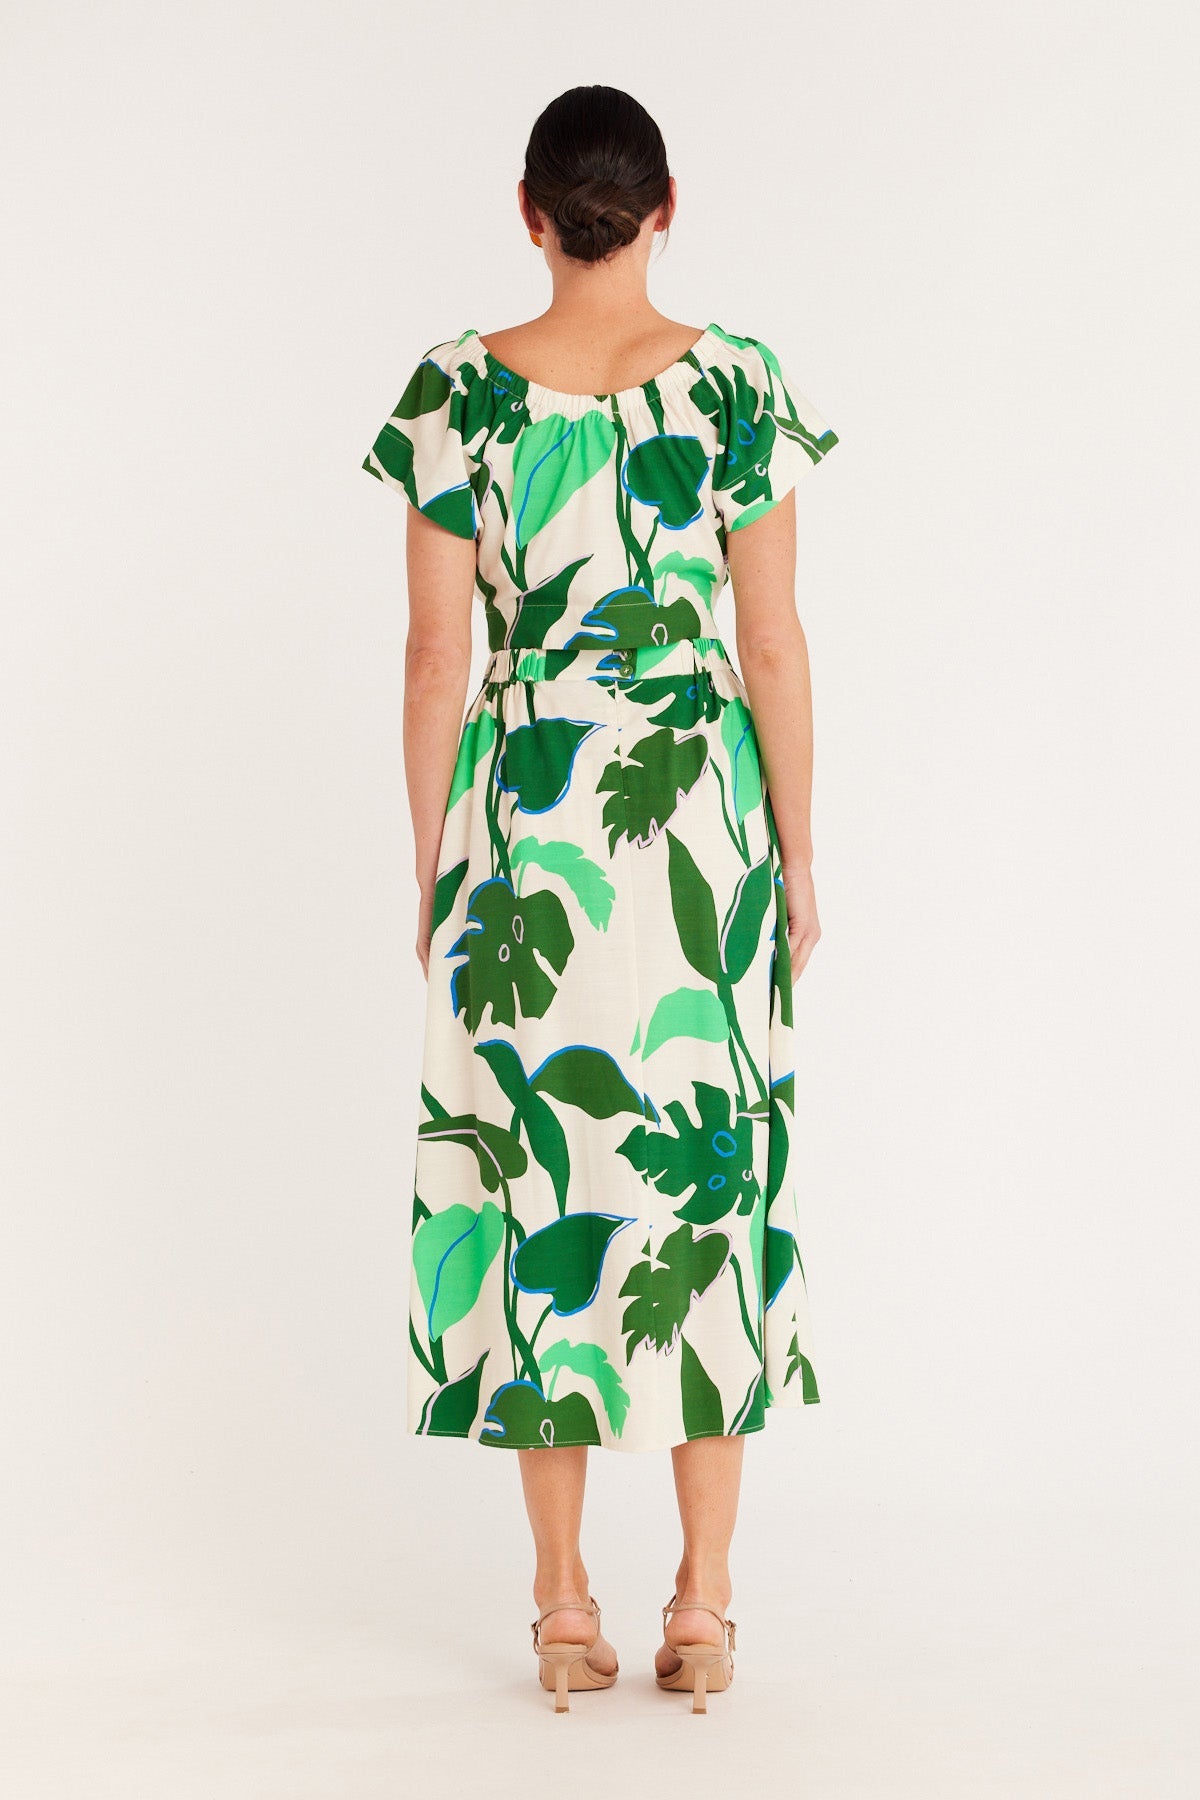 Shop Hayman Skirt | Green Palm Print - Cable Melbourne